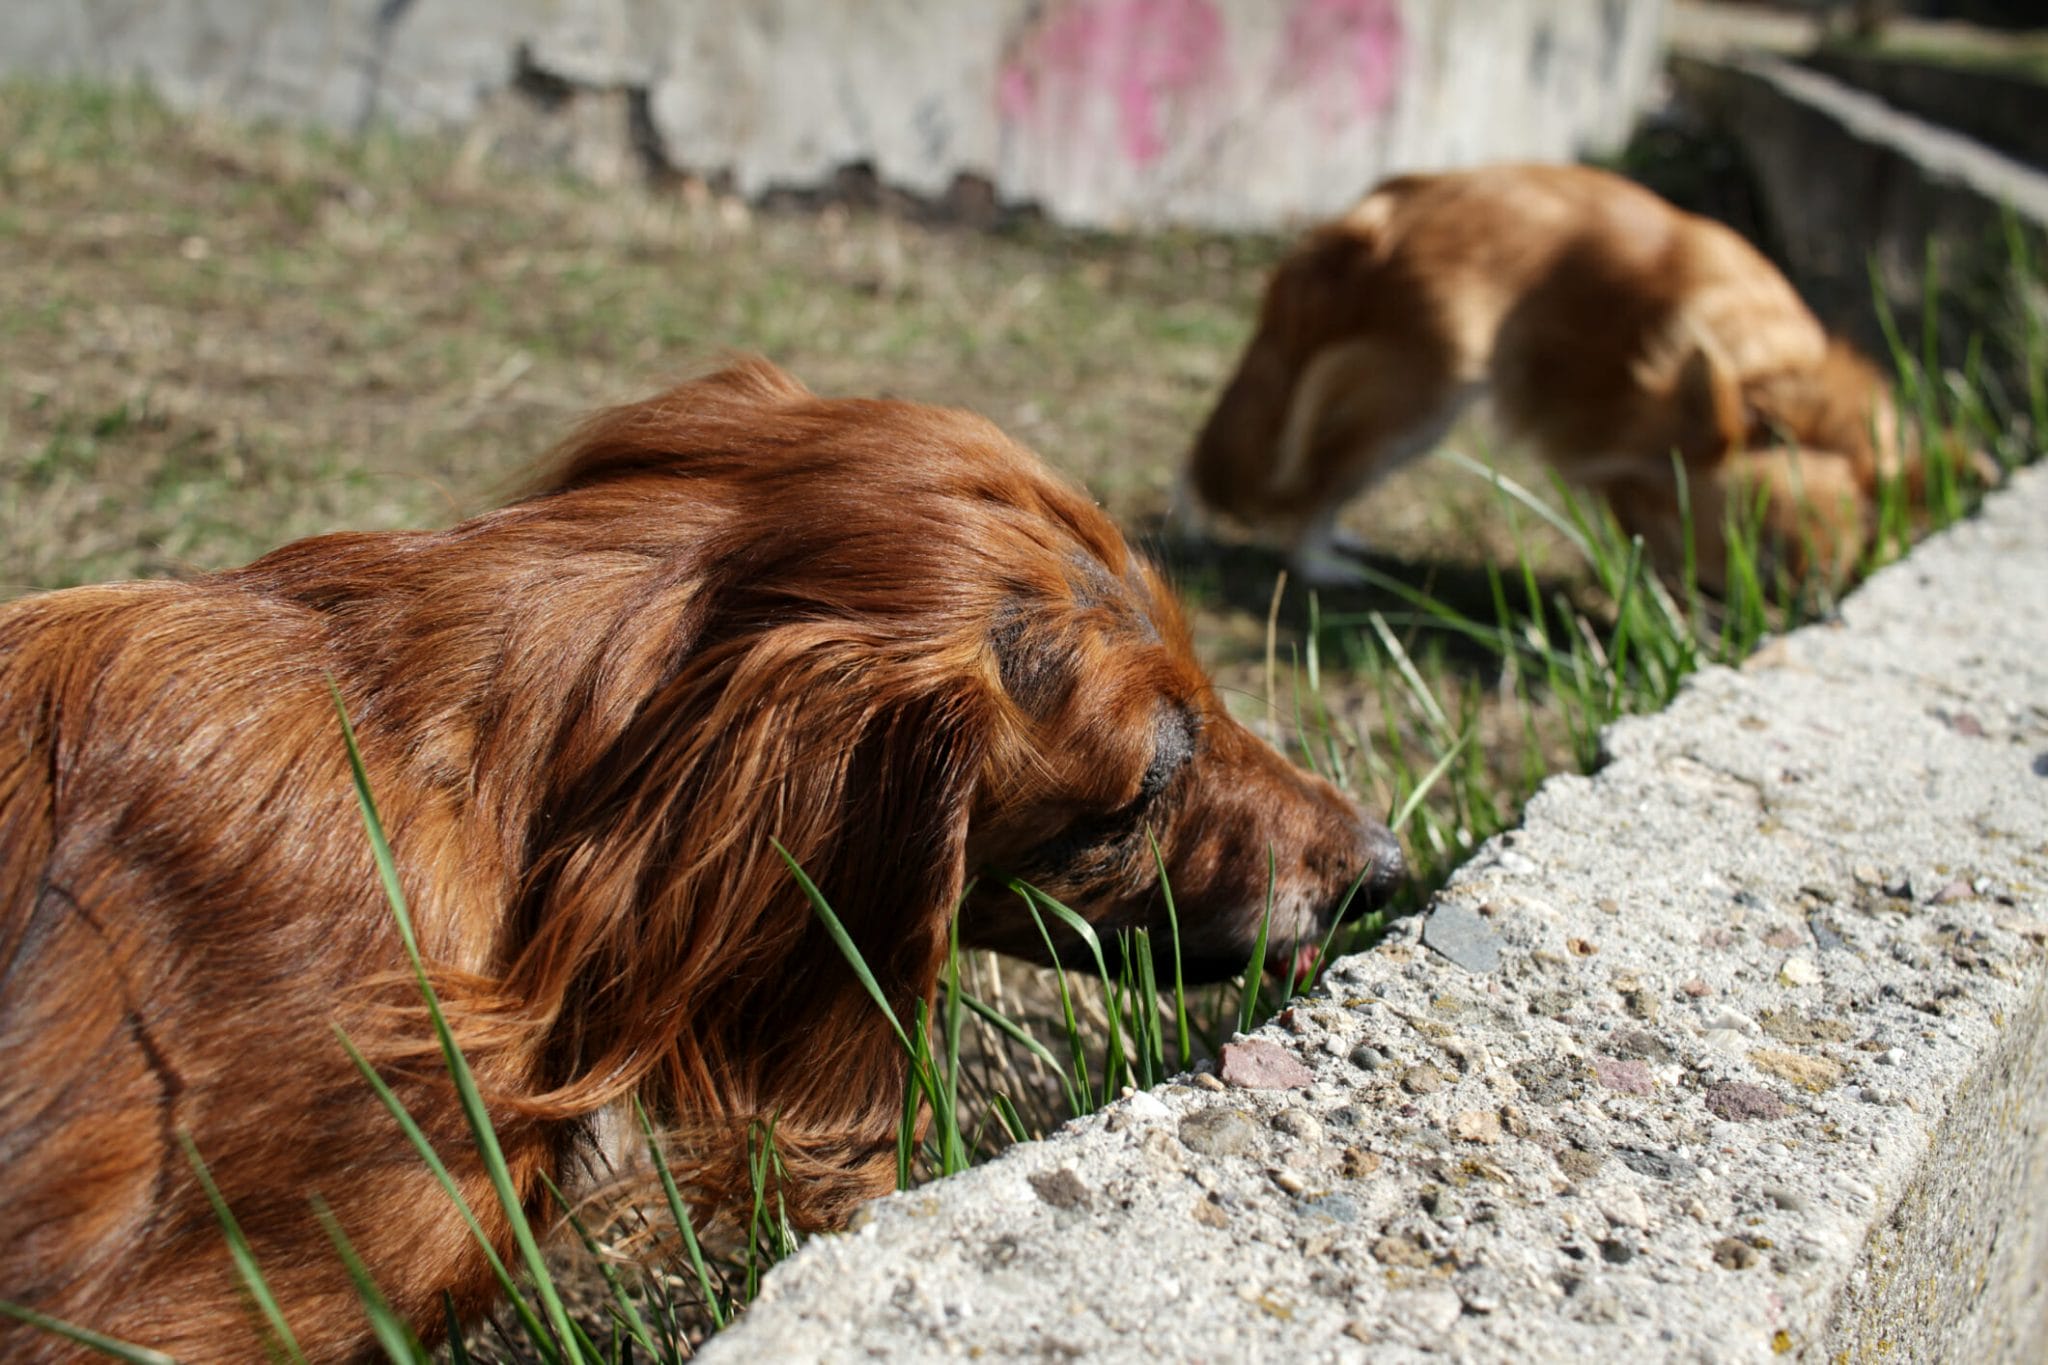 Poop Eating Deterrents For Dogs